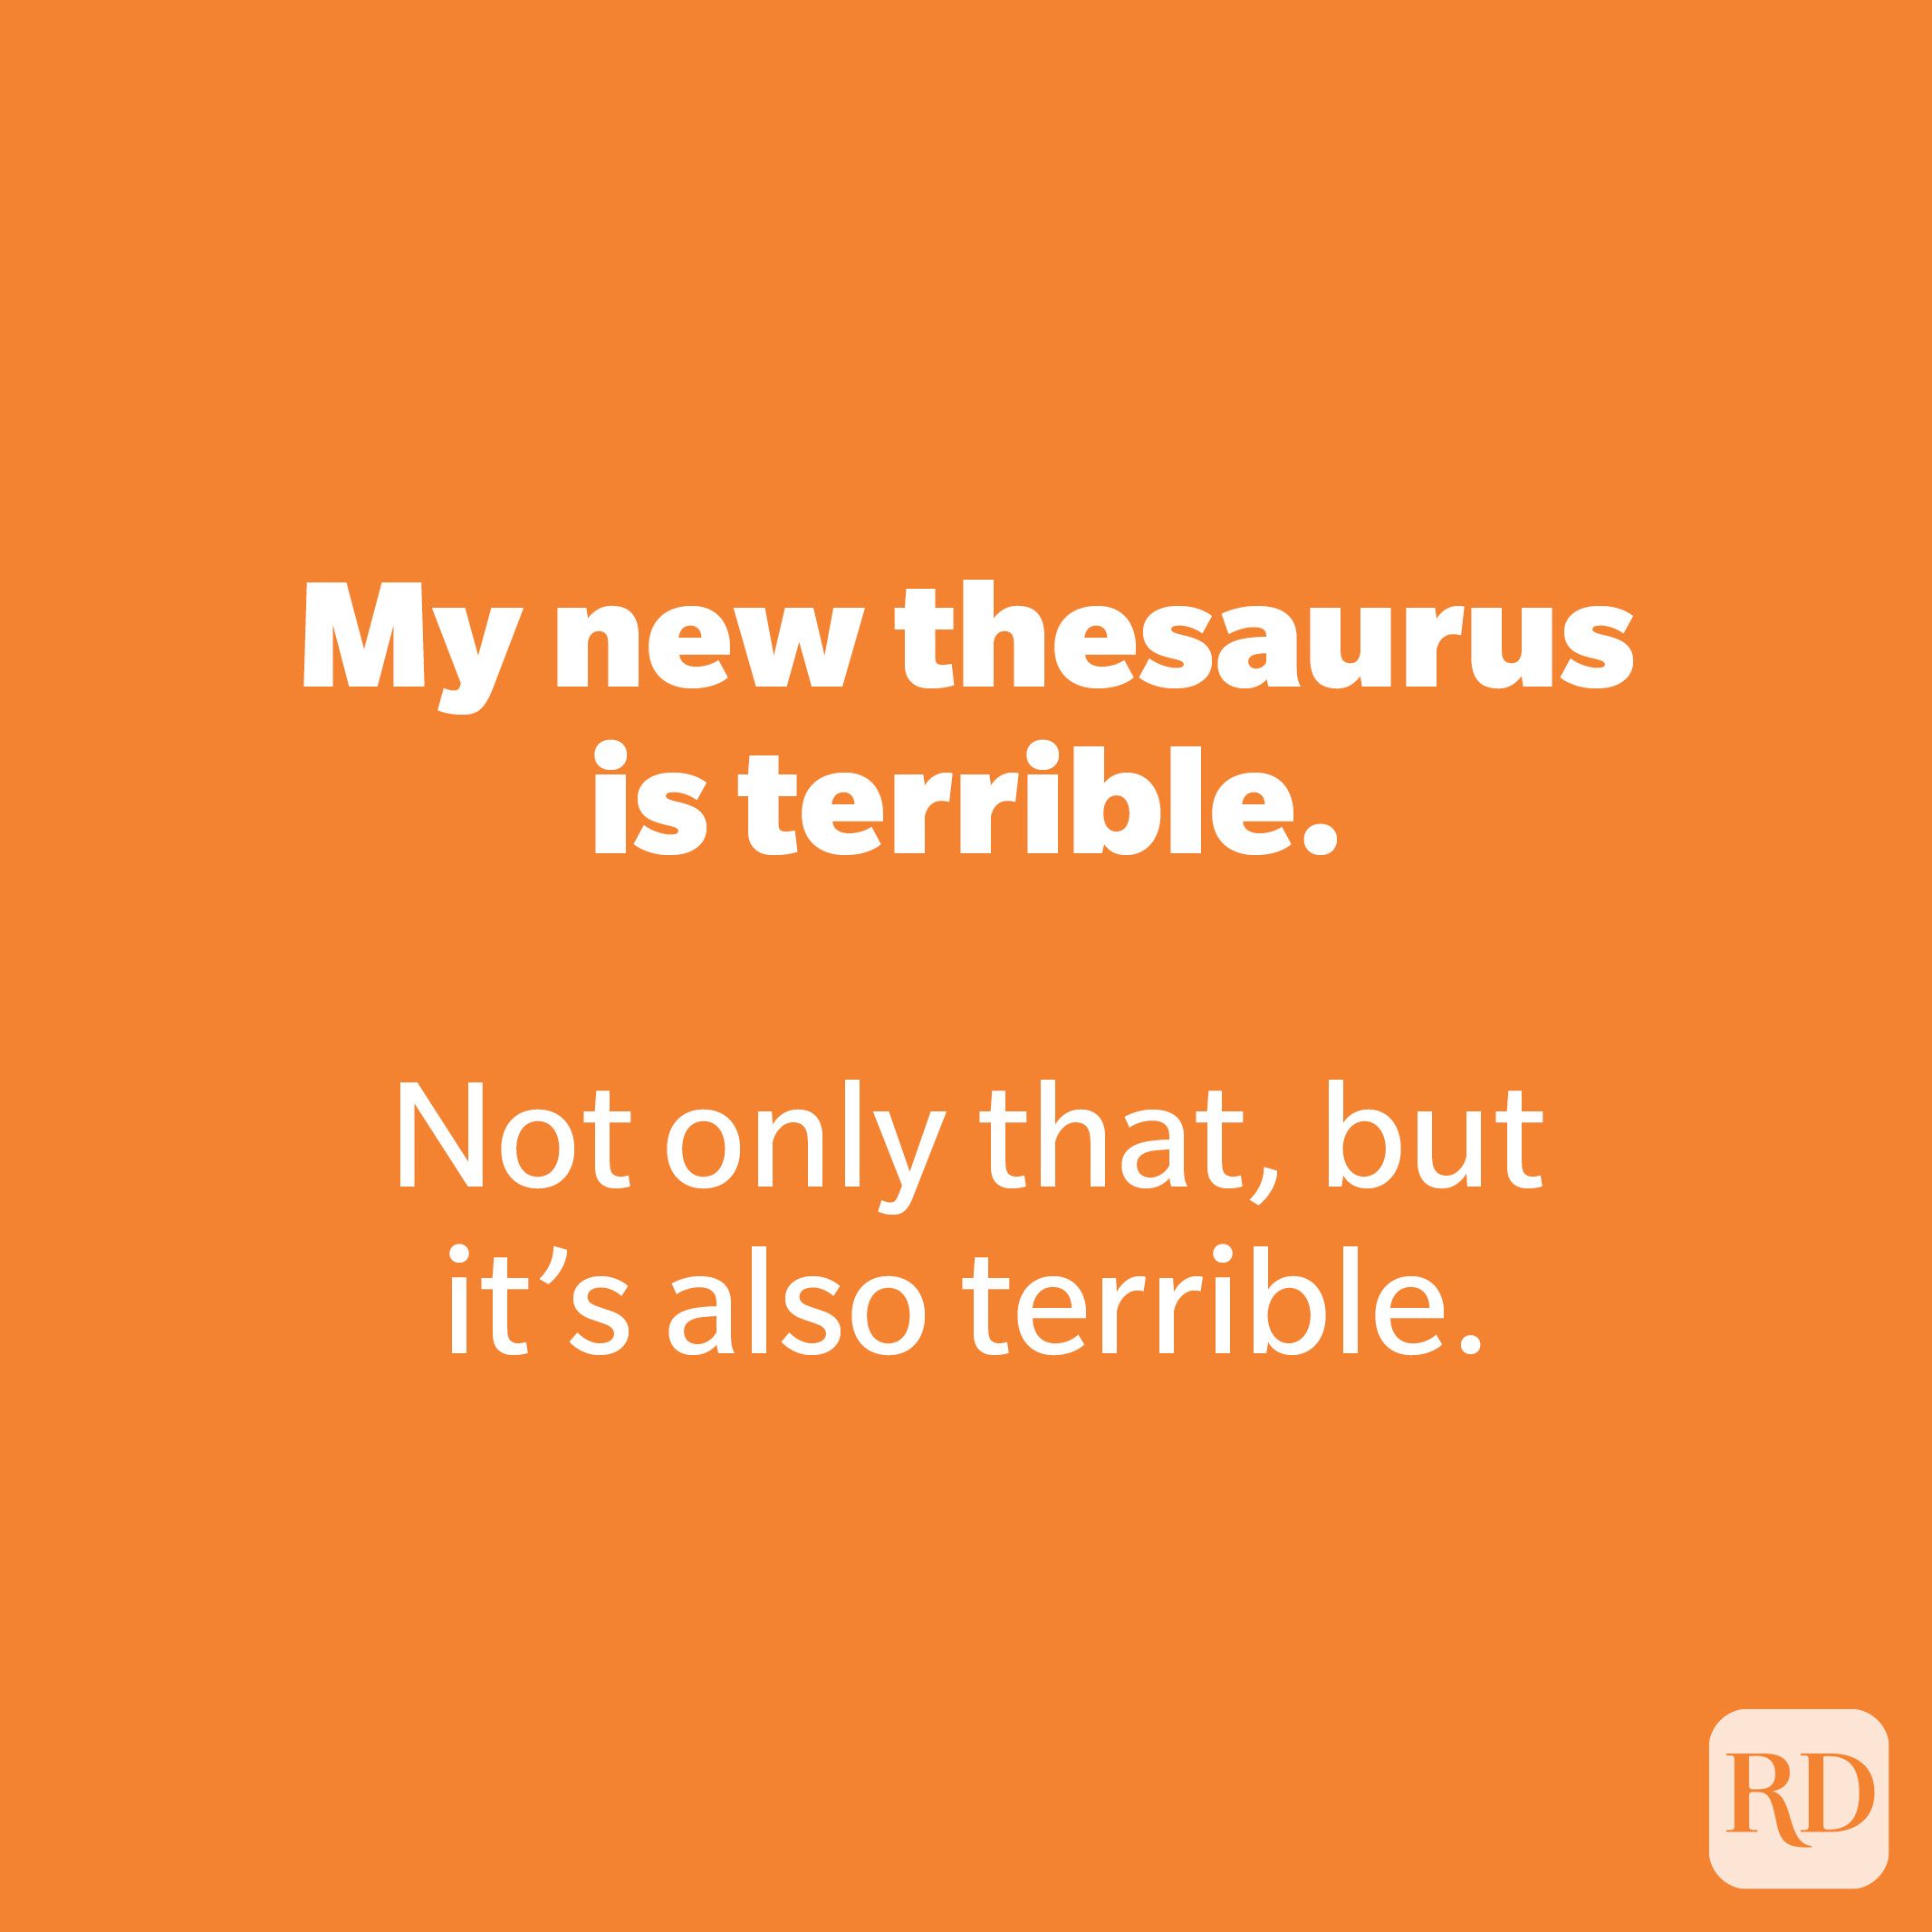 My new thesaurus is terrible.